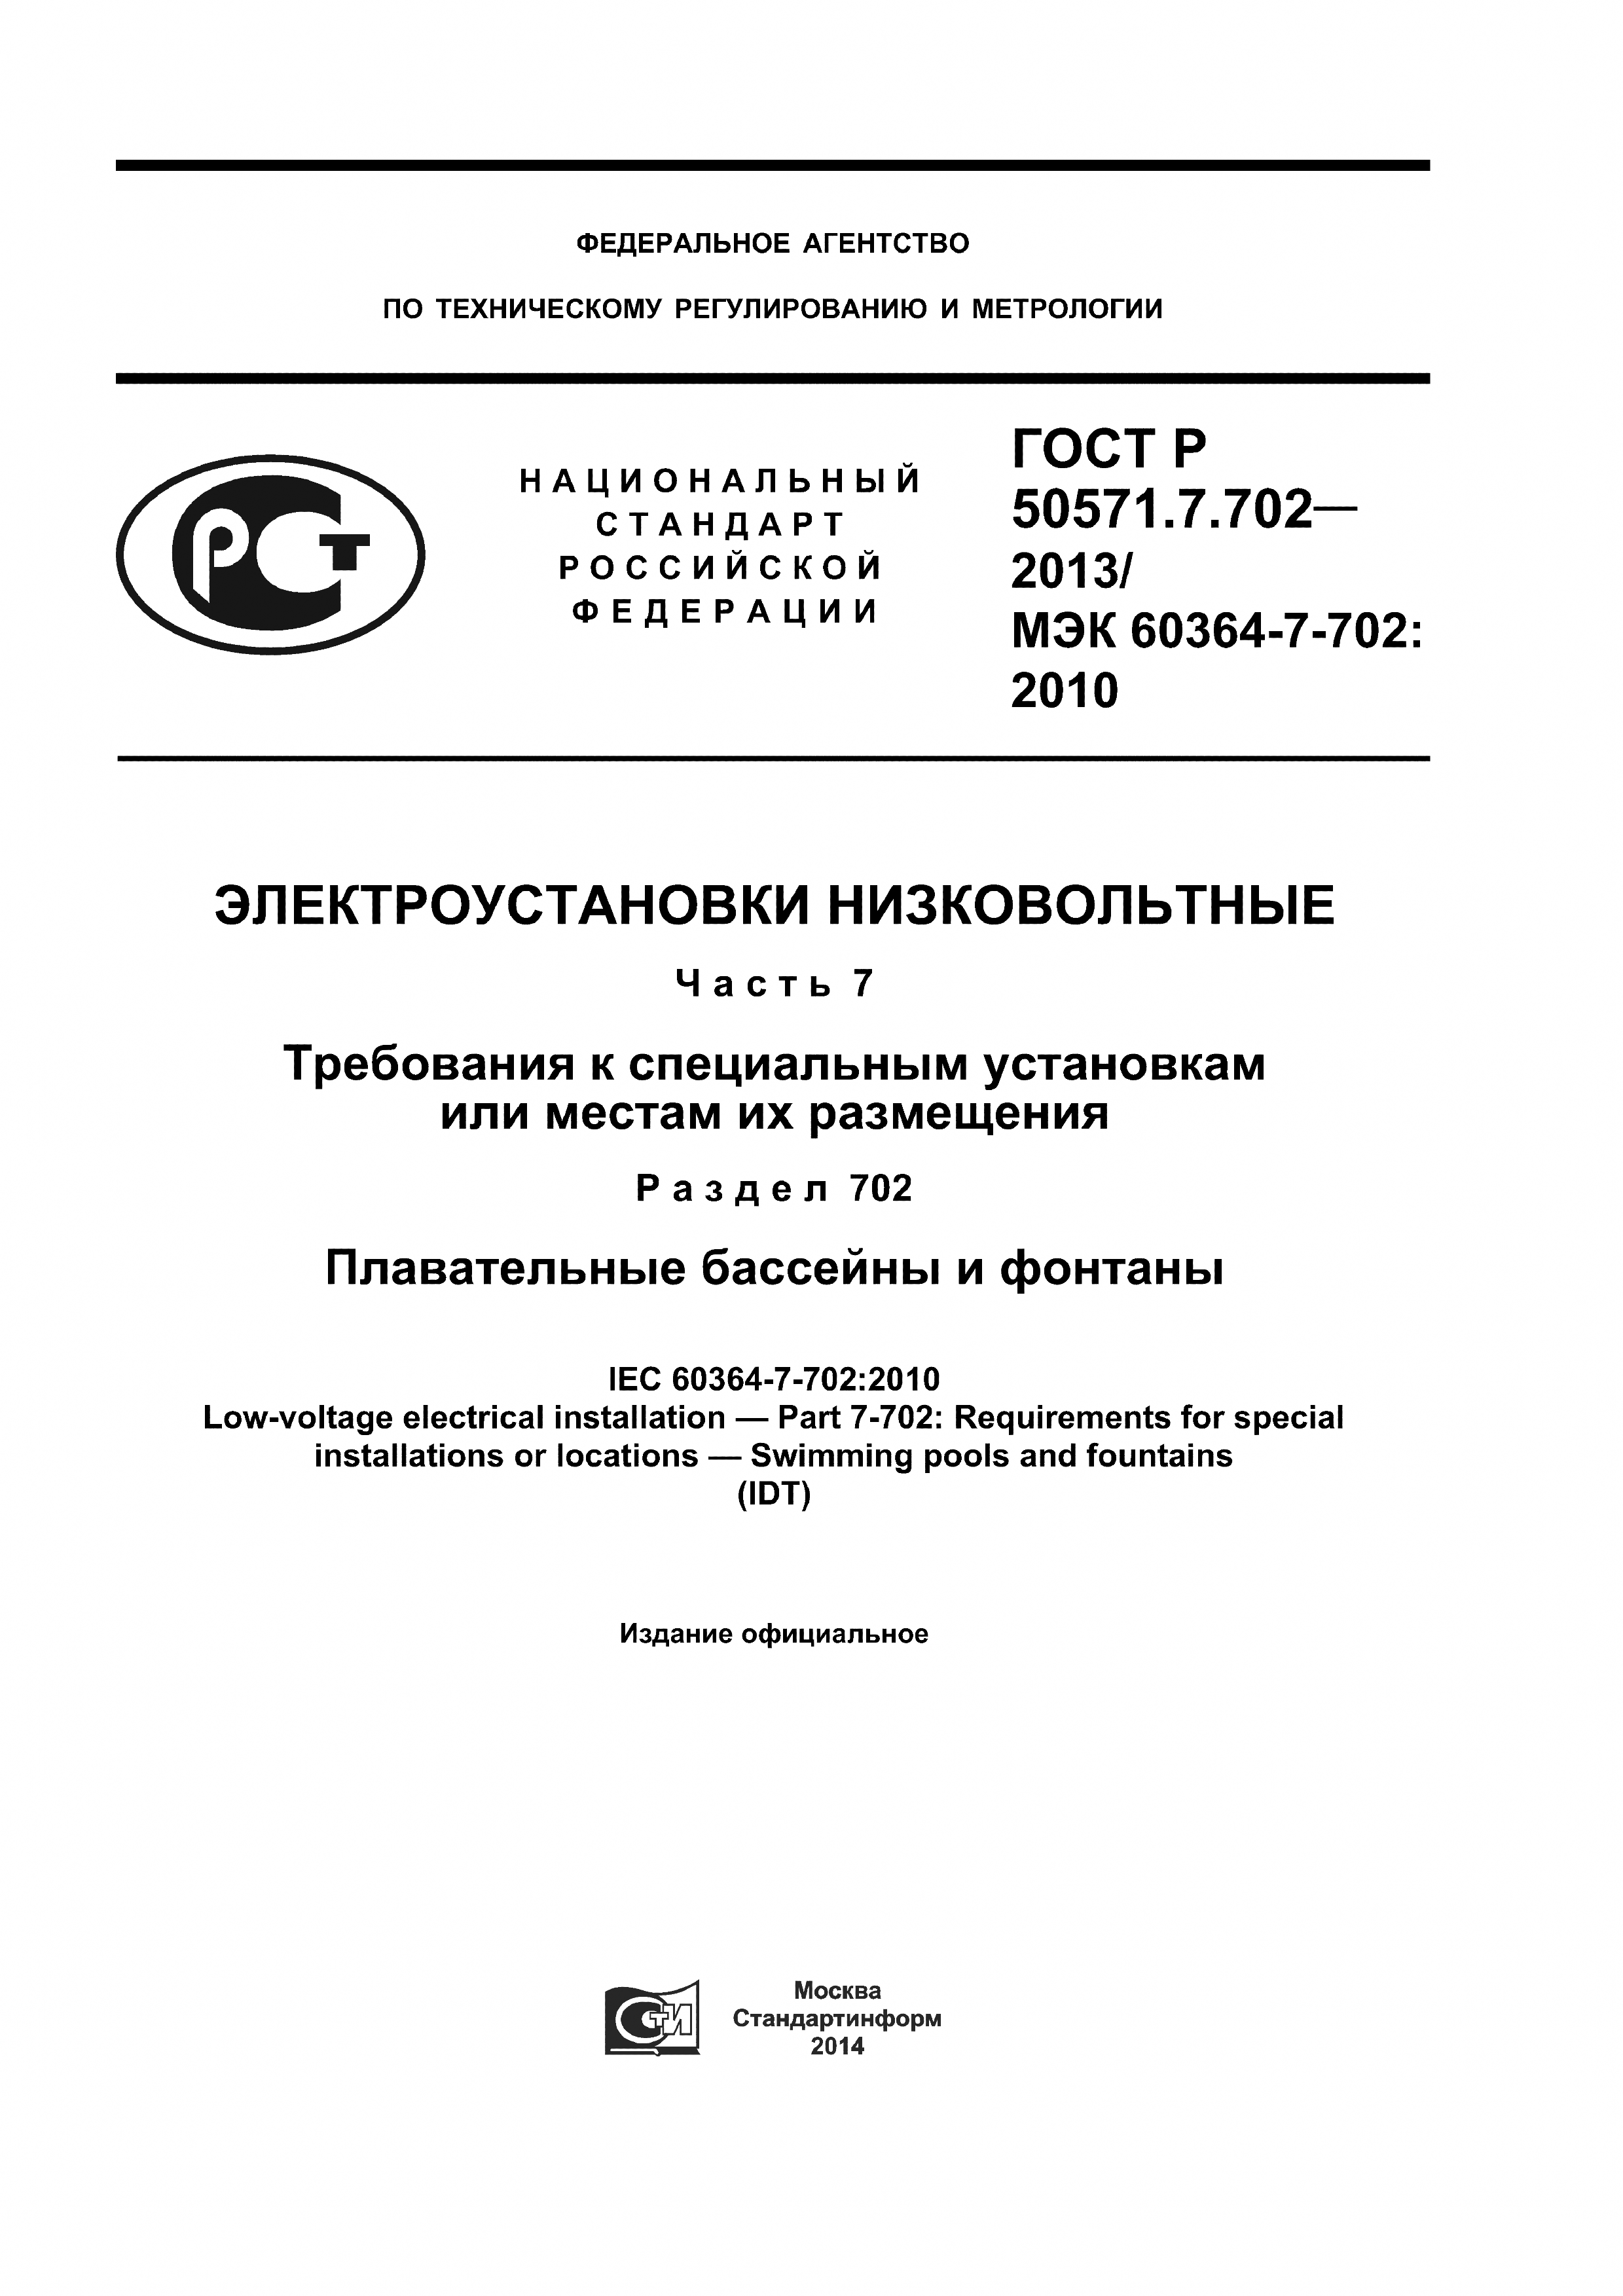 ГОСТ Р 50571.7.702-2013